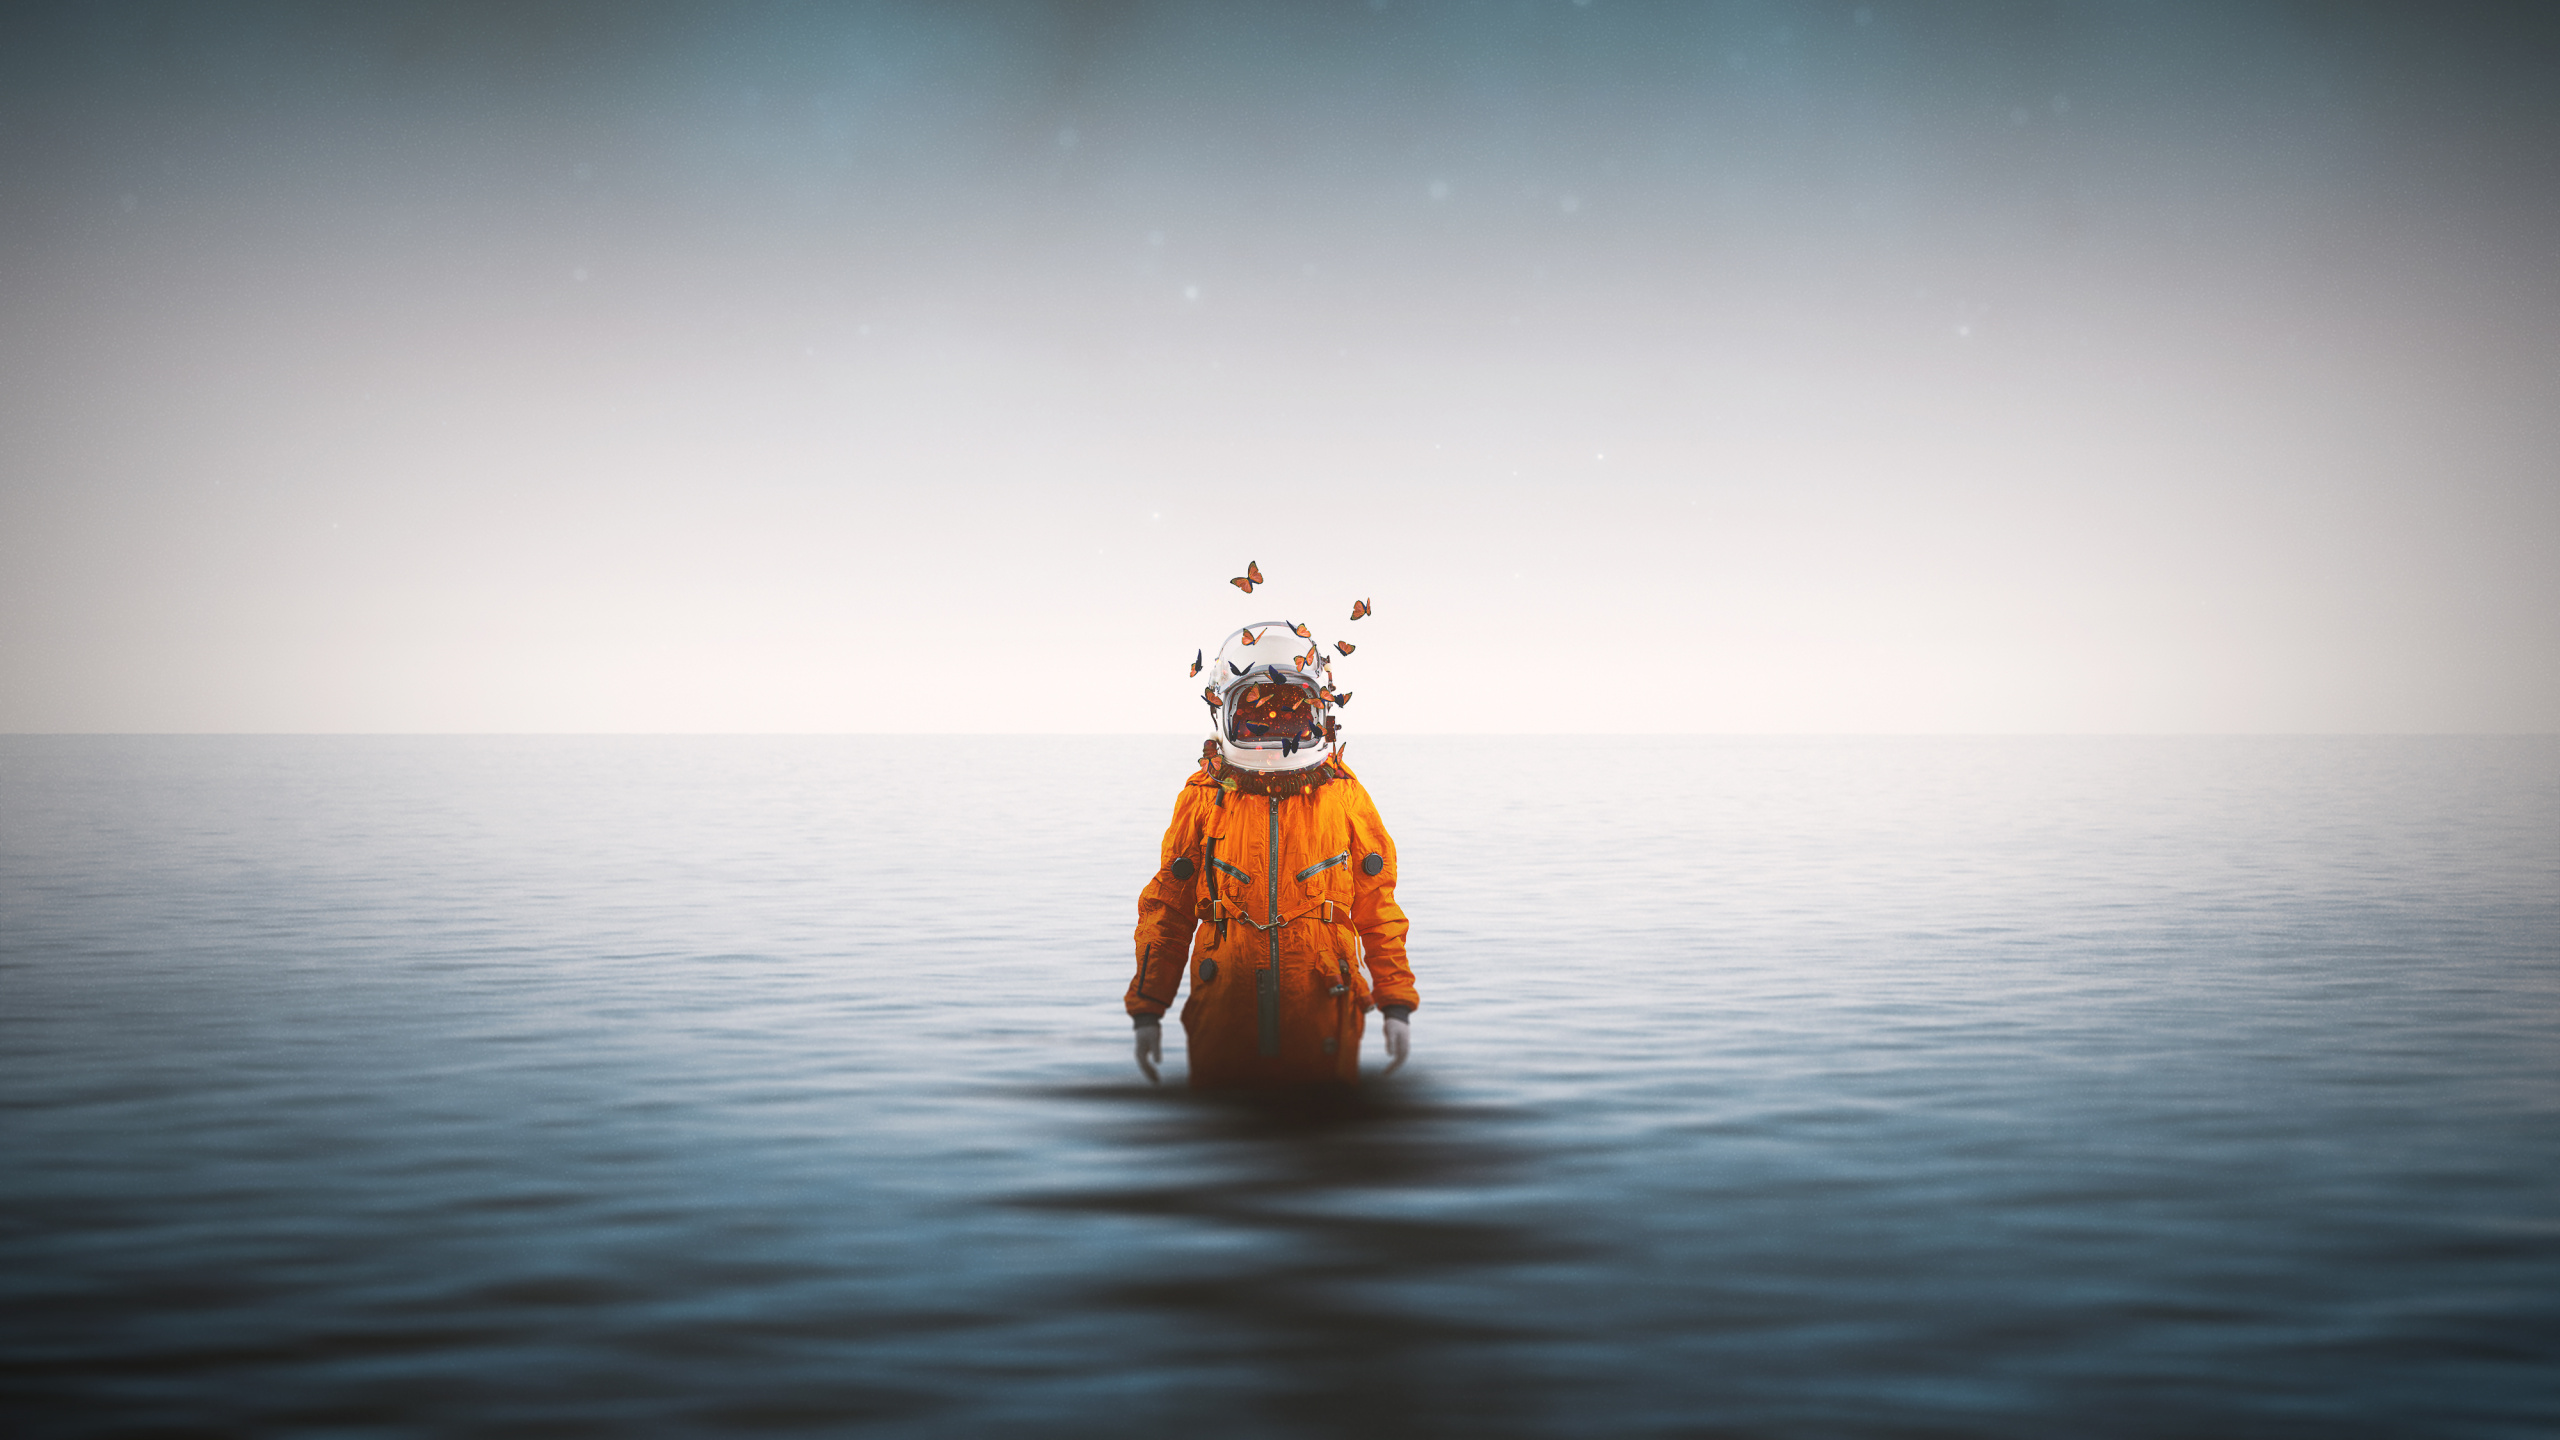 Person in Orange Jacket Standing on Water Under Starry Night. Wallpaper in 2560x1440 Resolution